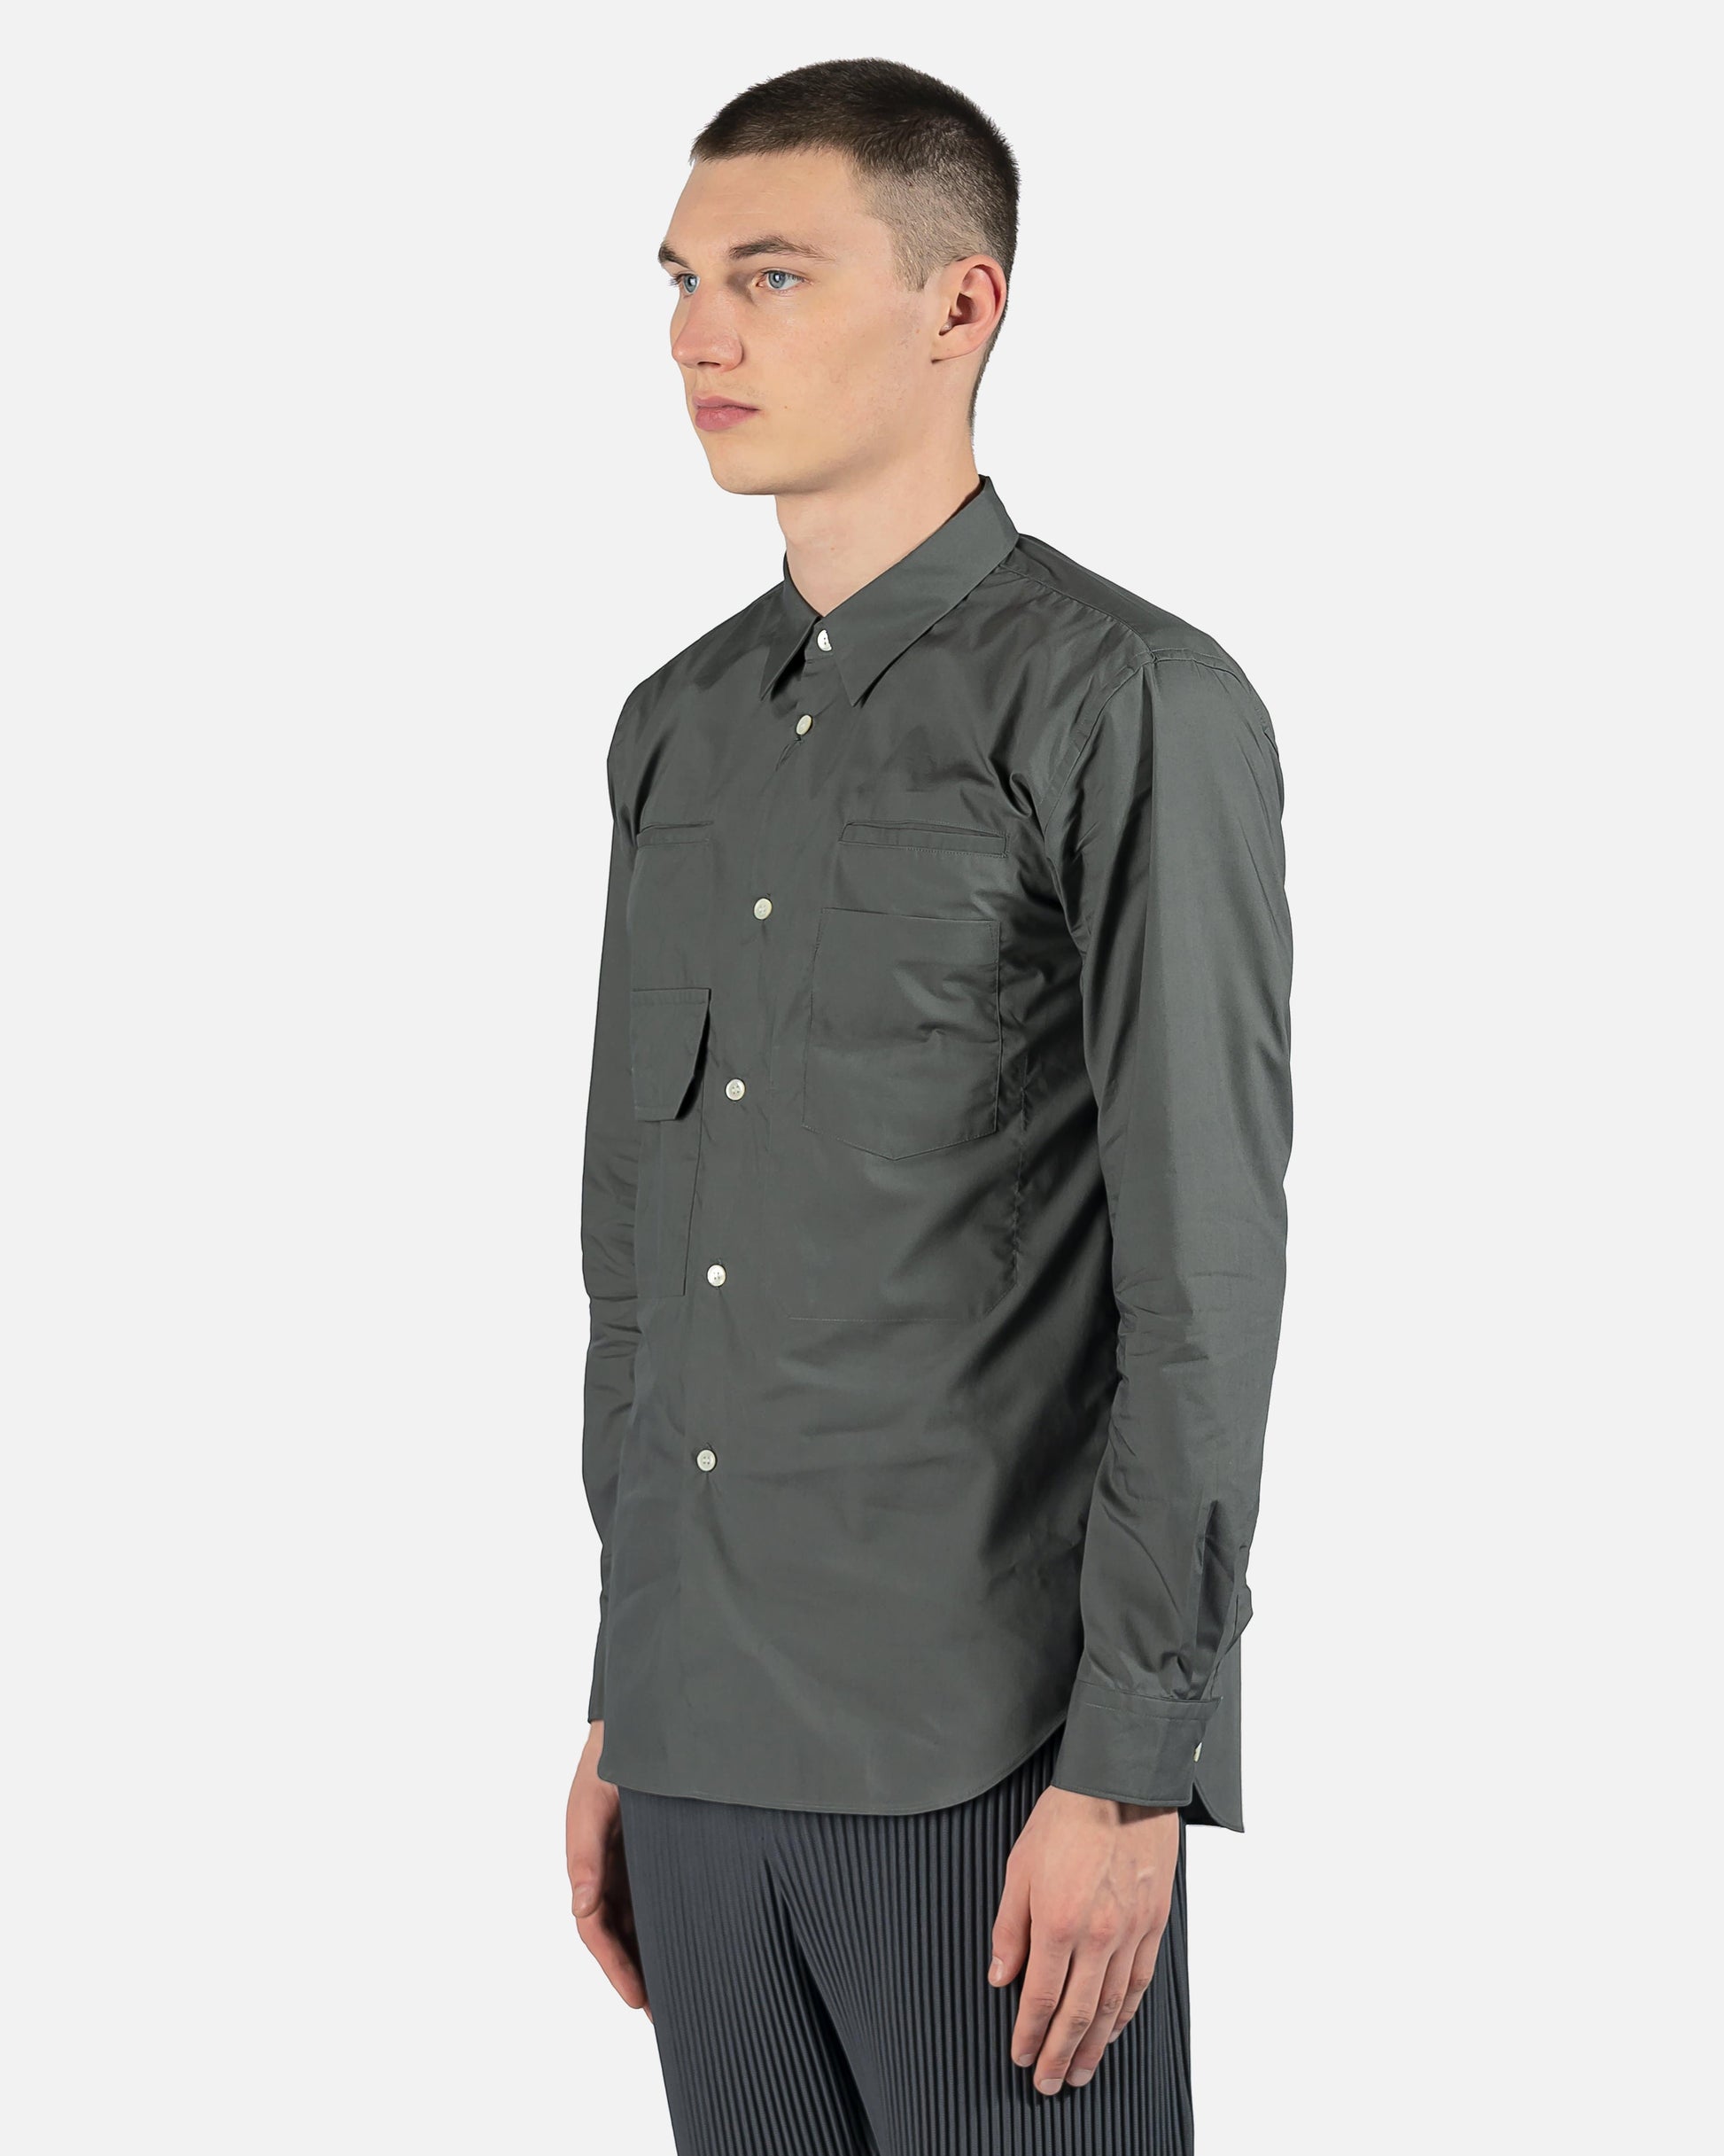 Comme des Garcons Homme Deux Men's Shirts Pocket Button-Up in Grey